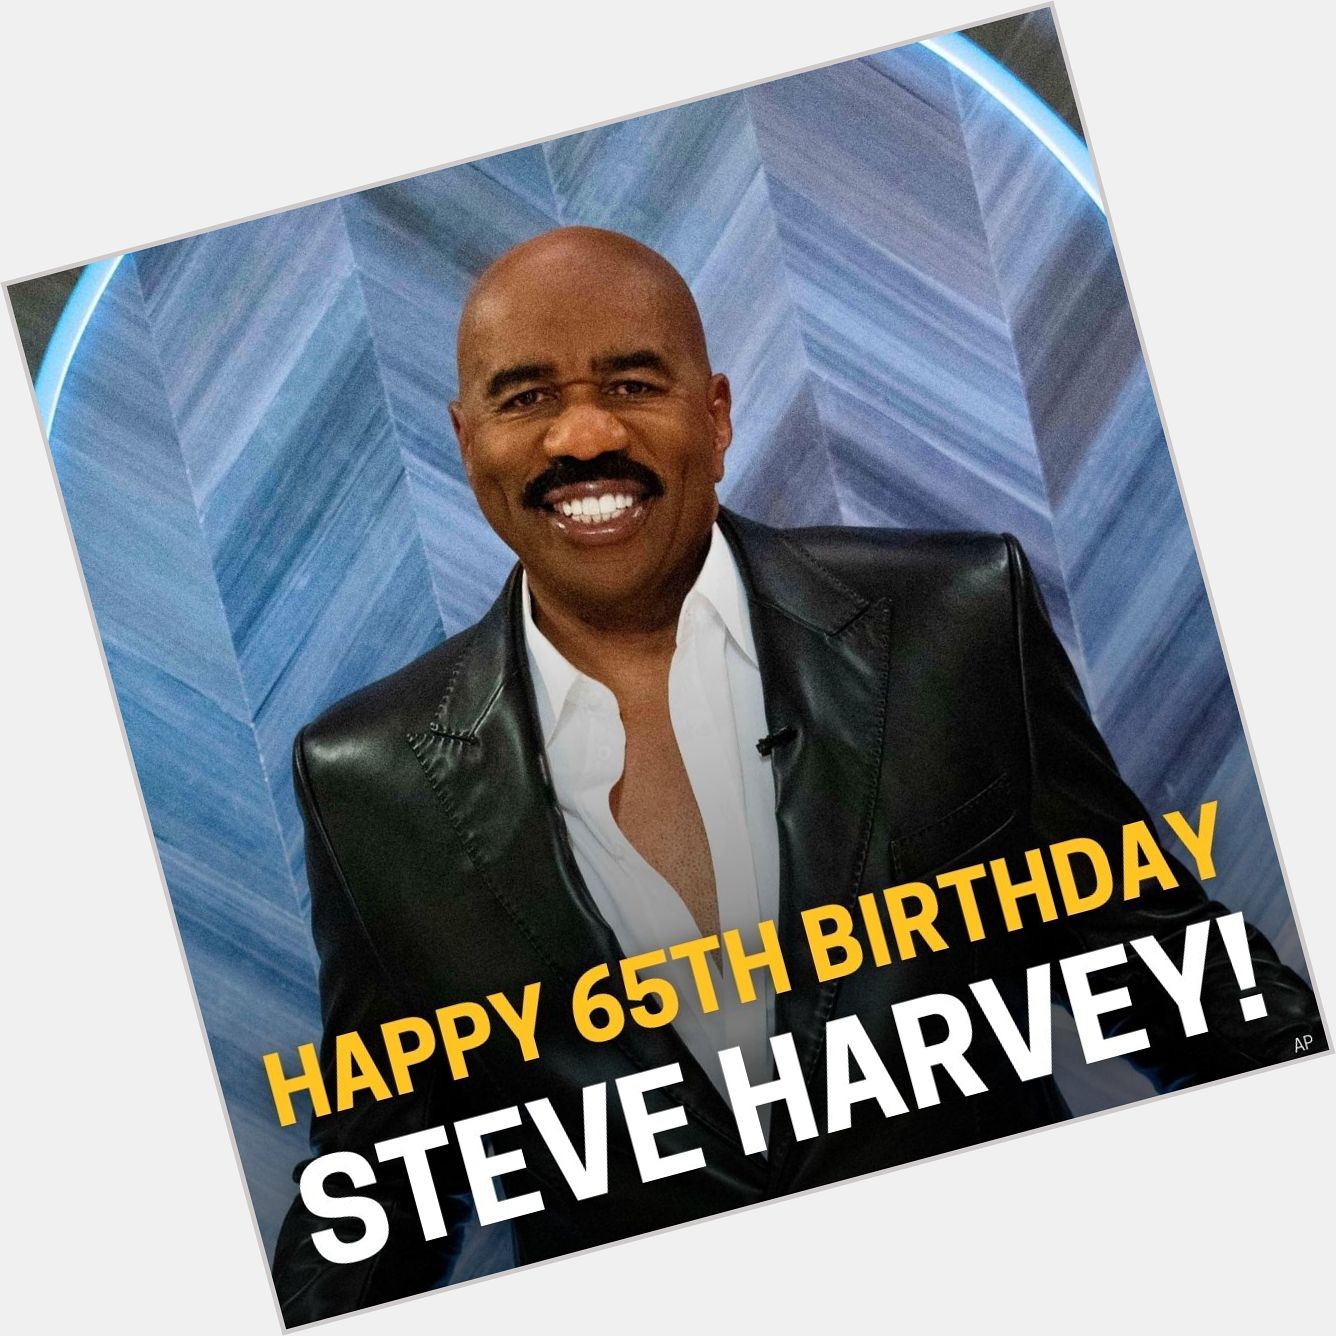 Happy 65th birthday to Steve Harvey! 